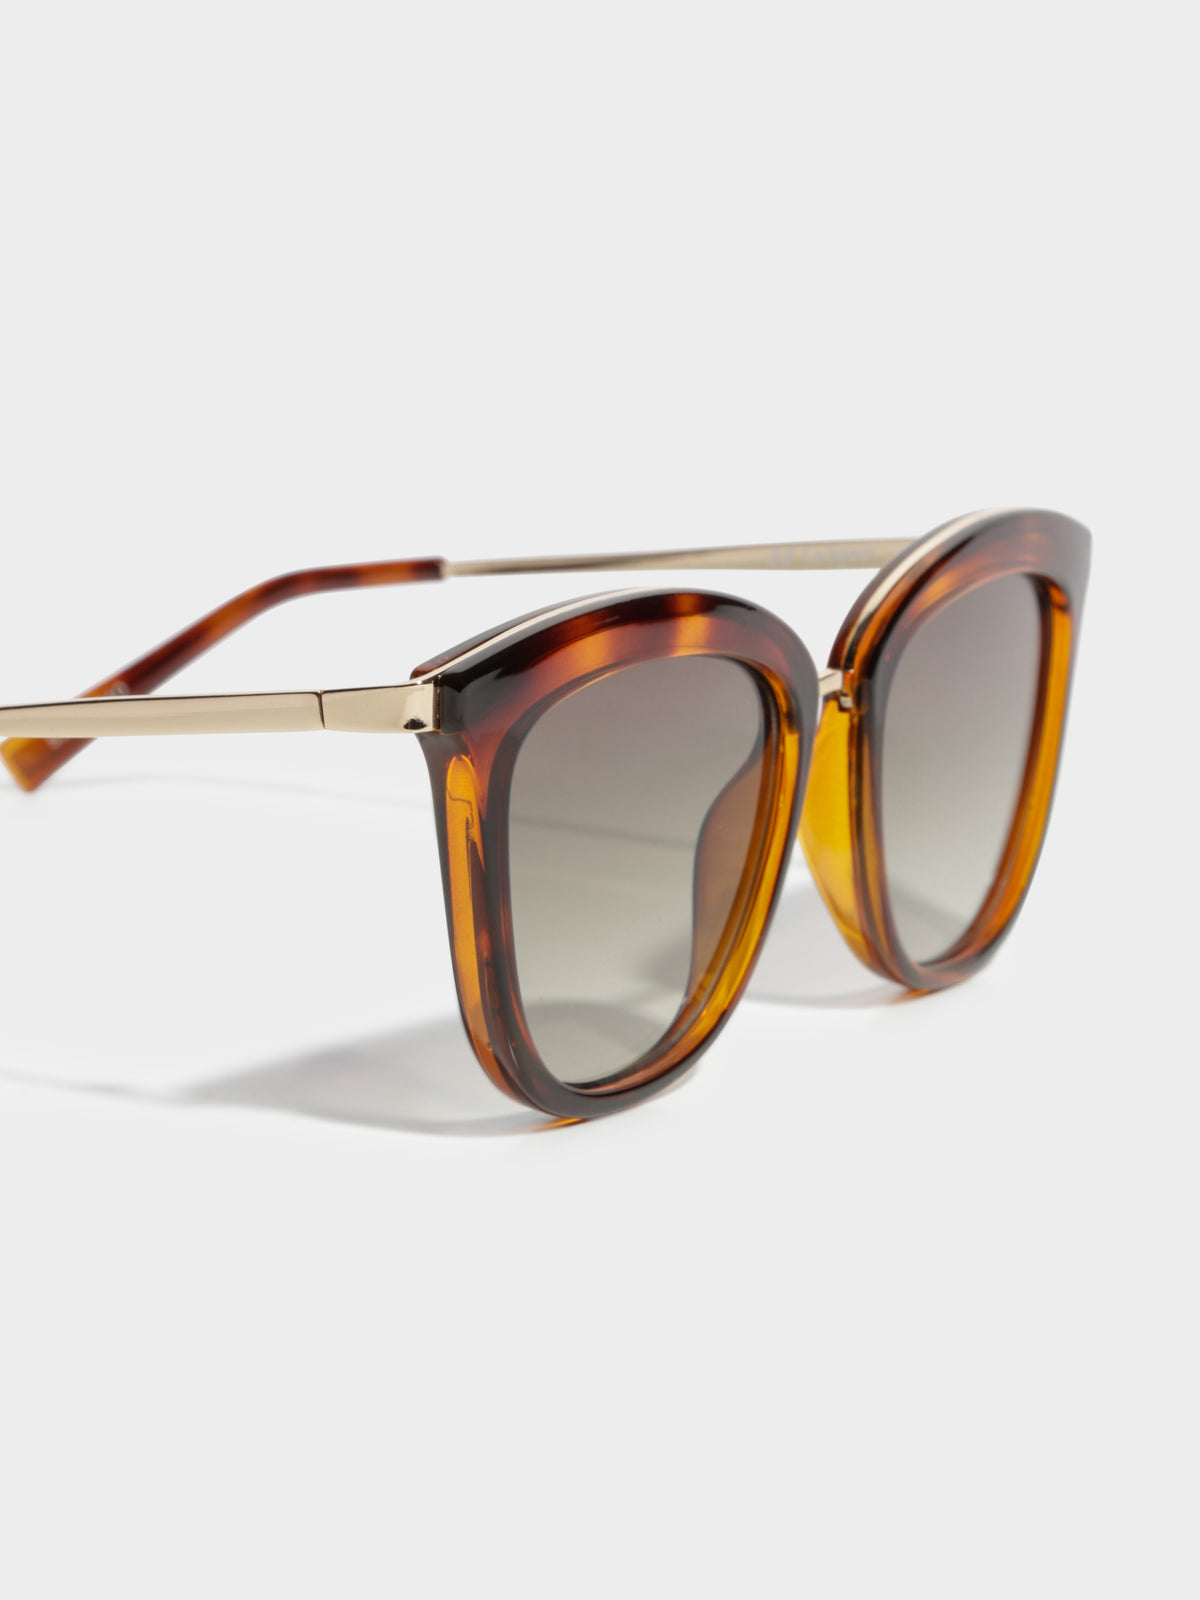 Caliente Sunglasses in Tortoiseshell &amp; Toffee